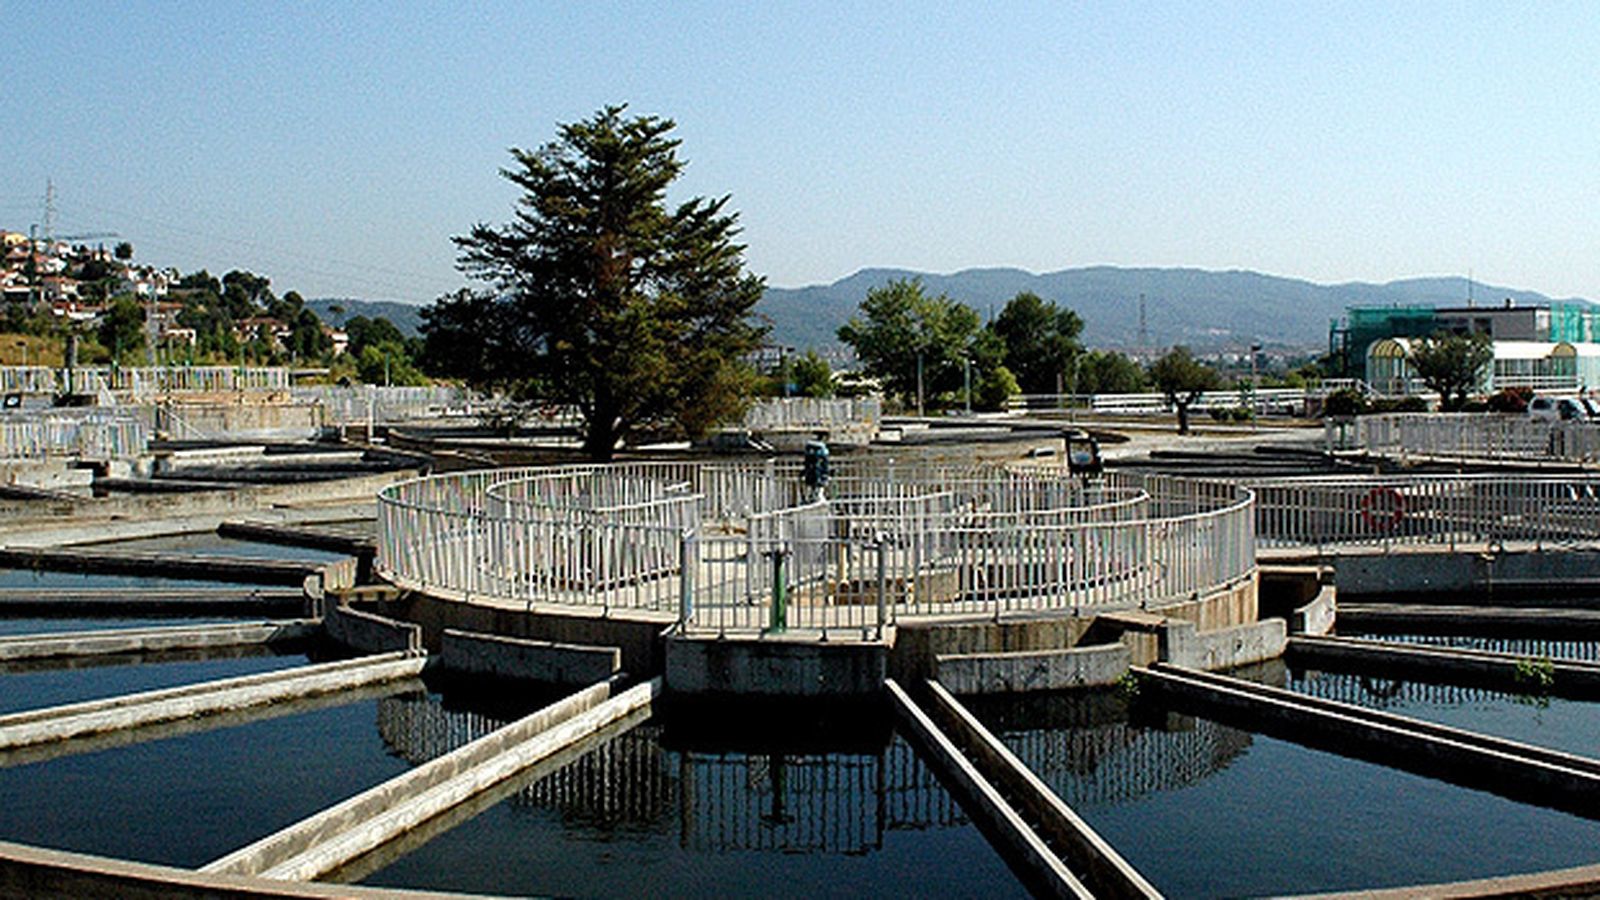 Foto: Estación de tratamiento de agua potable en Llobregat (www.atll.cat)